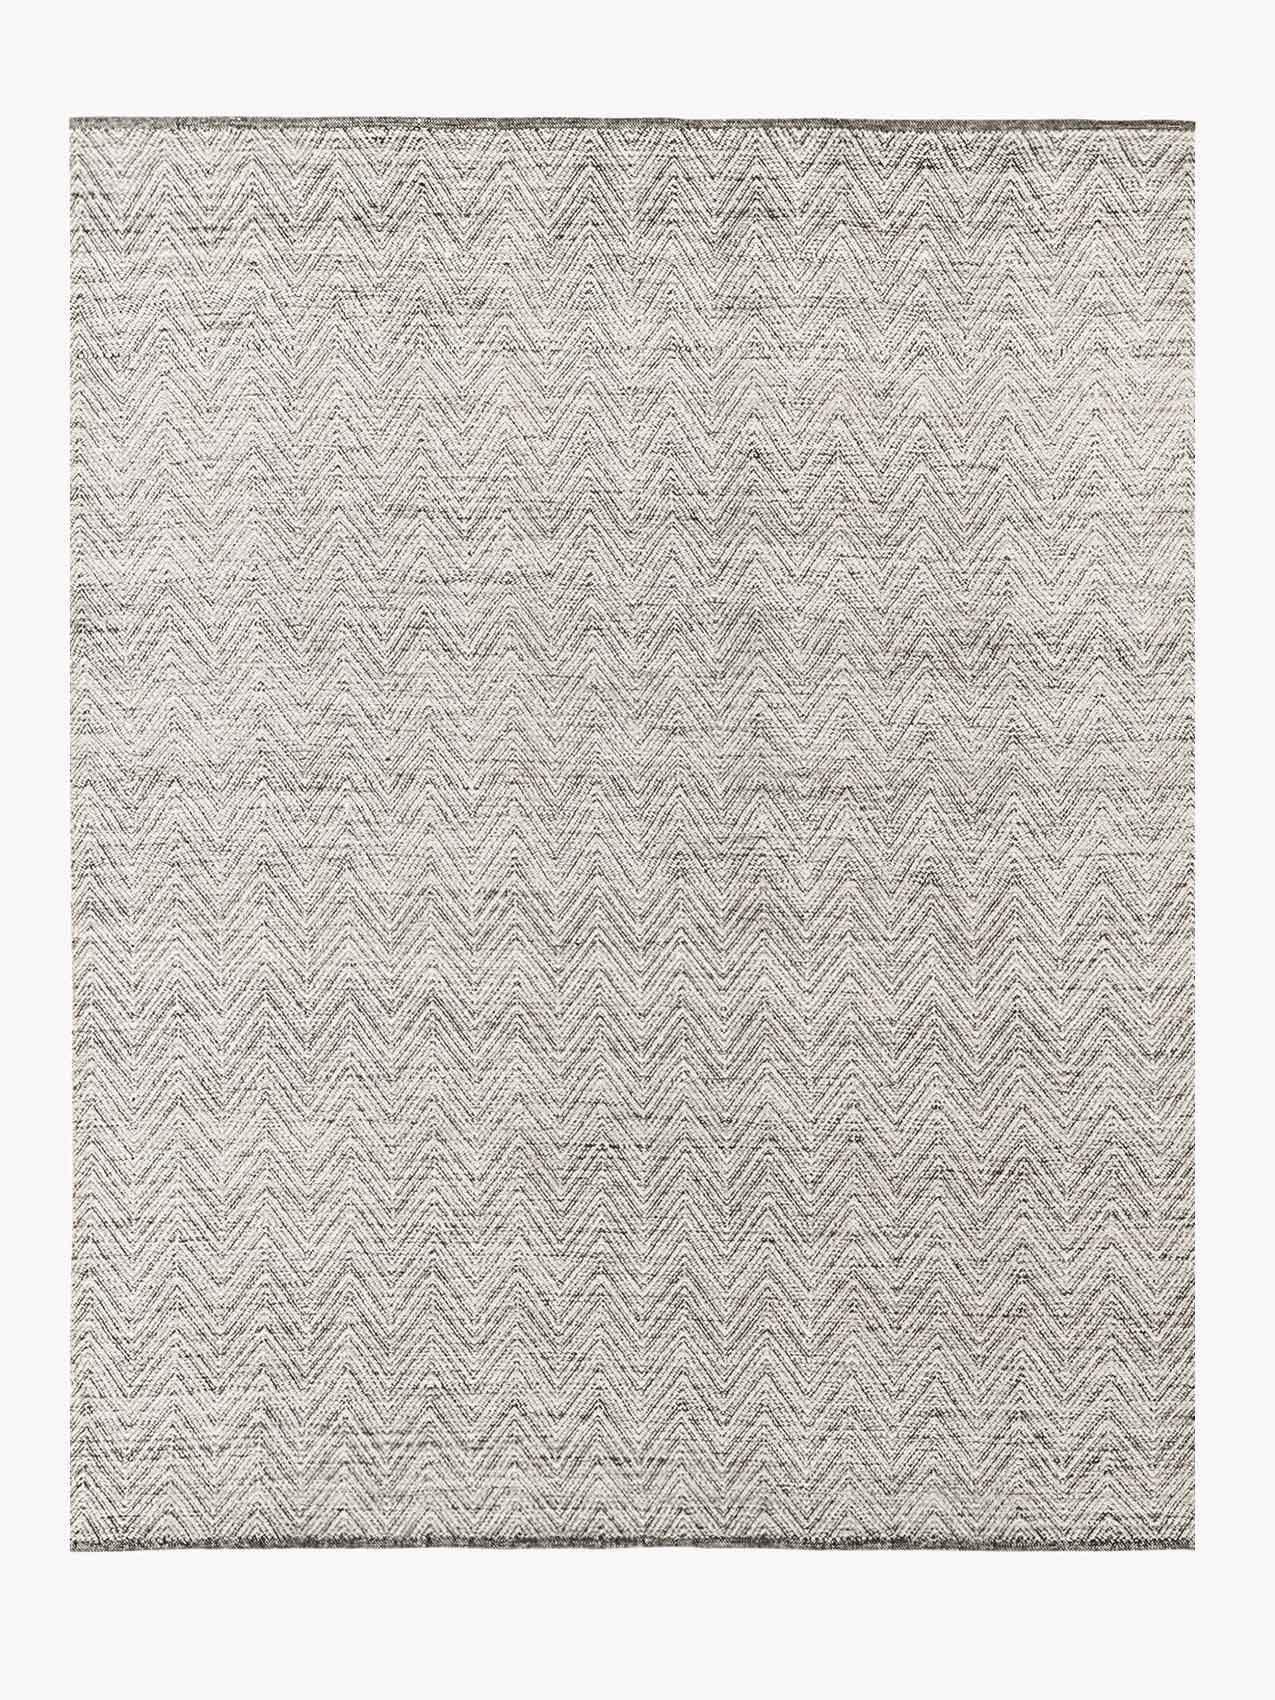 For Sale: Silver Ben Soleimani Ceyah Rug– Hand-woven Plush Textured Wool + Linen Charcoal 8'x10'